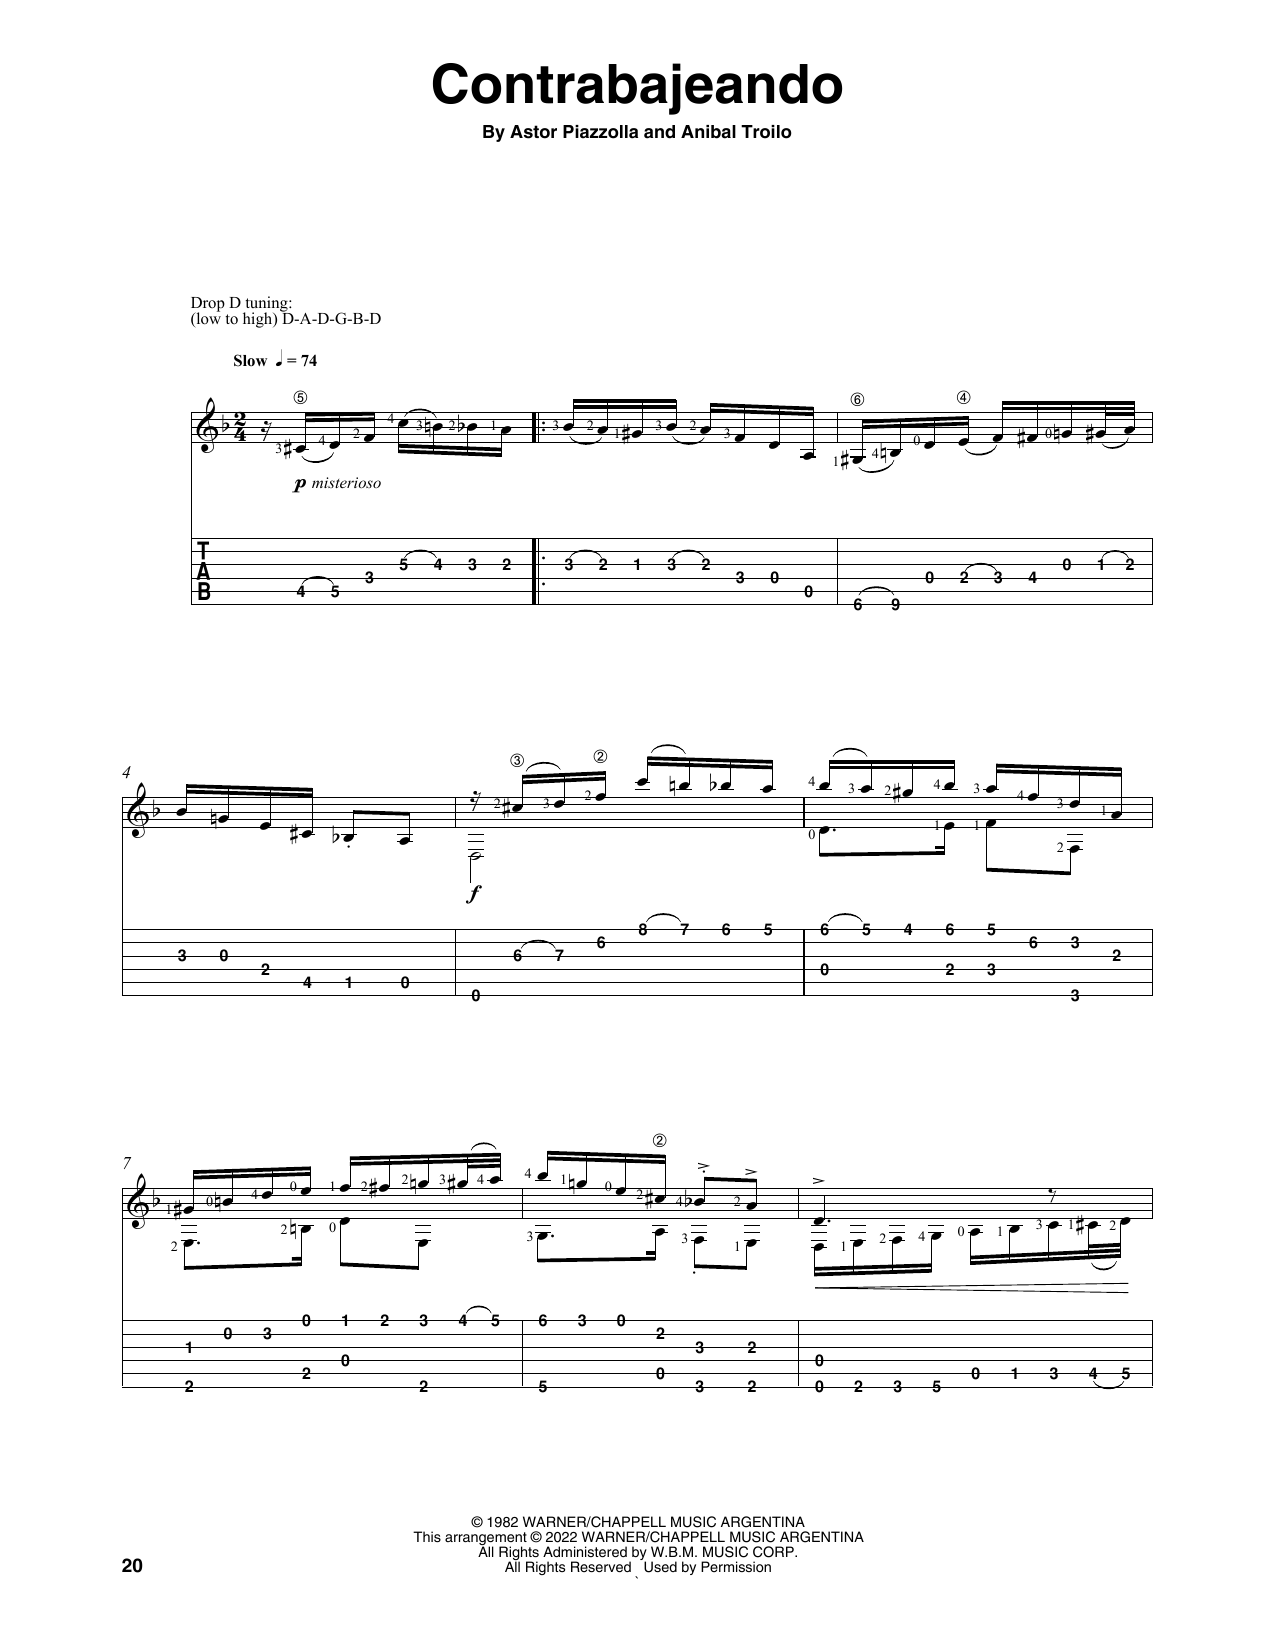 Astor Piazzolla Contrabajeando (arr. Celil Refik Kaya) Sheet Music Notes & Chords for Solo Guitar - Download or Print PDF